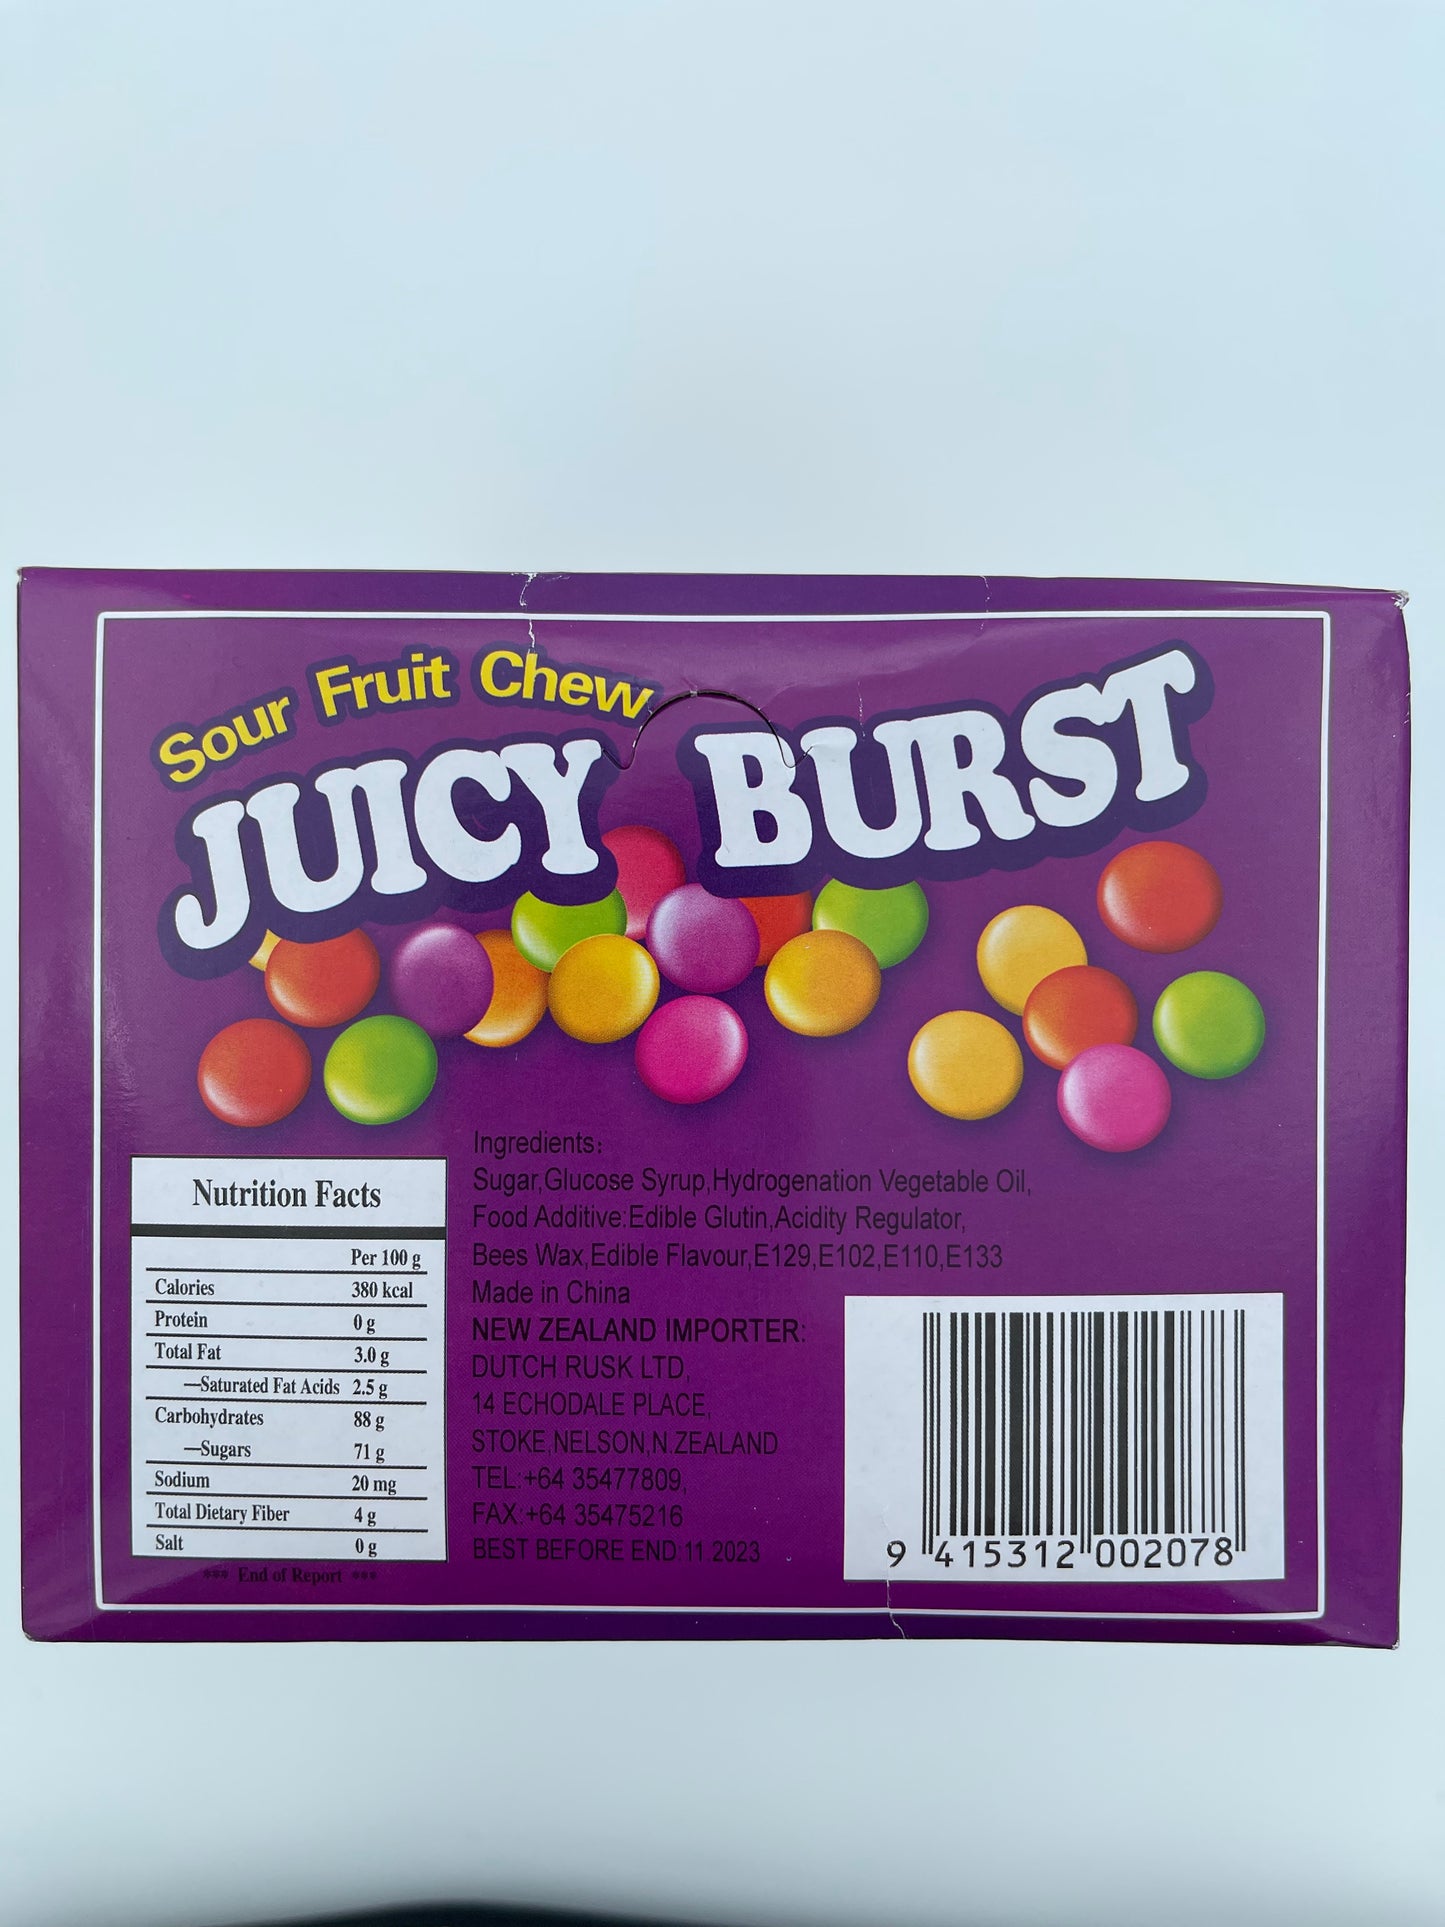 Juicy Burst Candy 42g